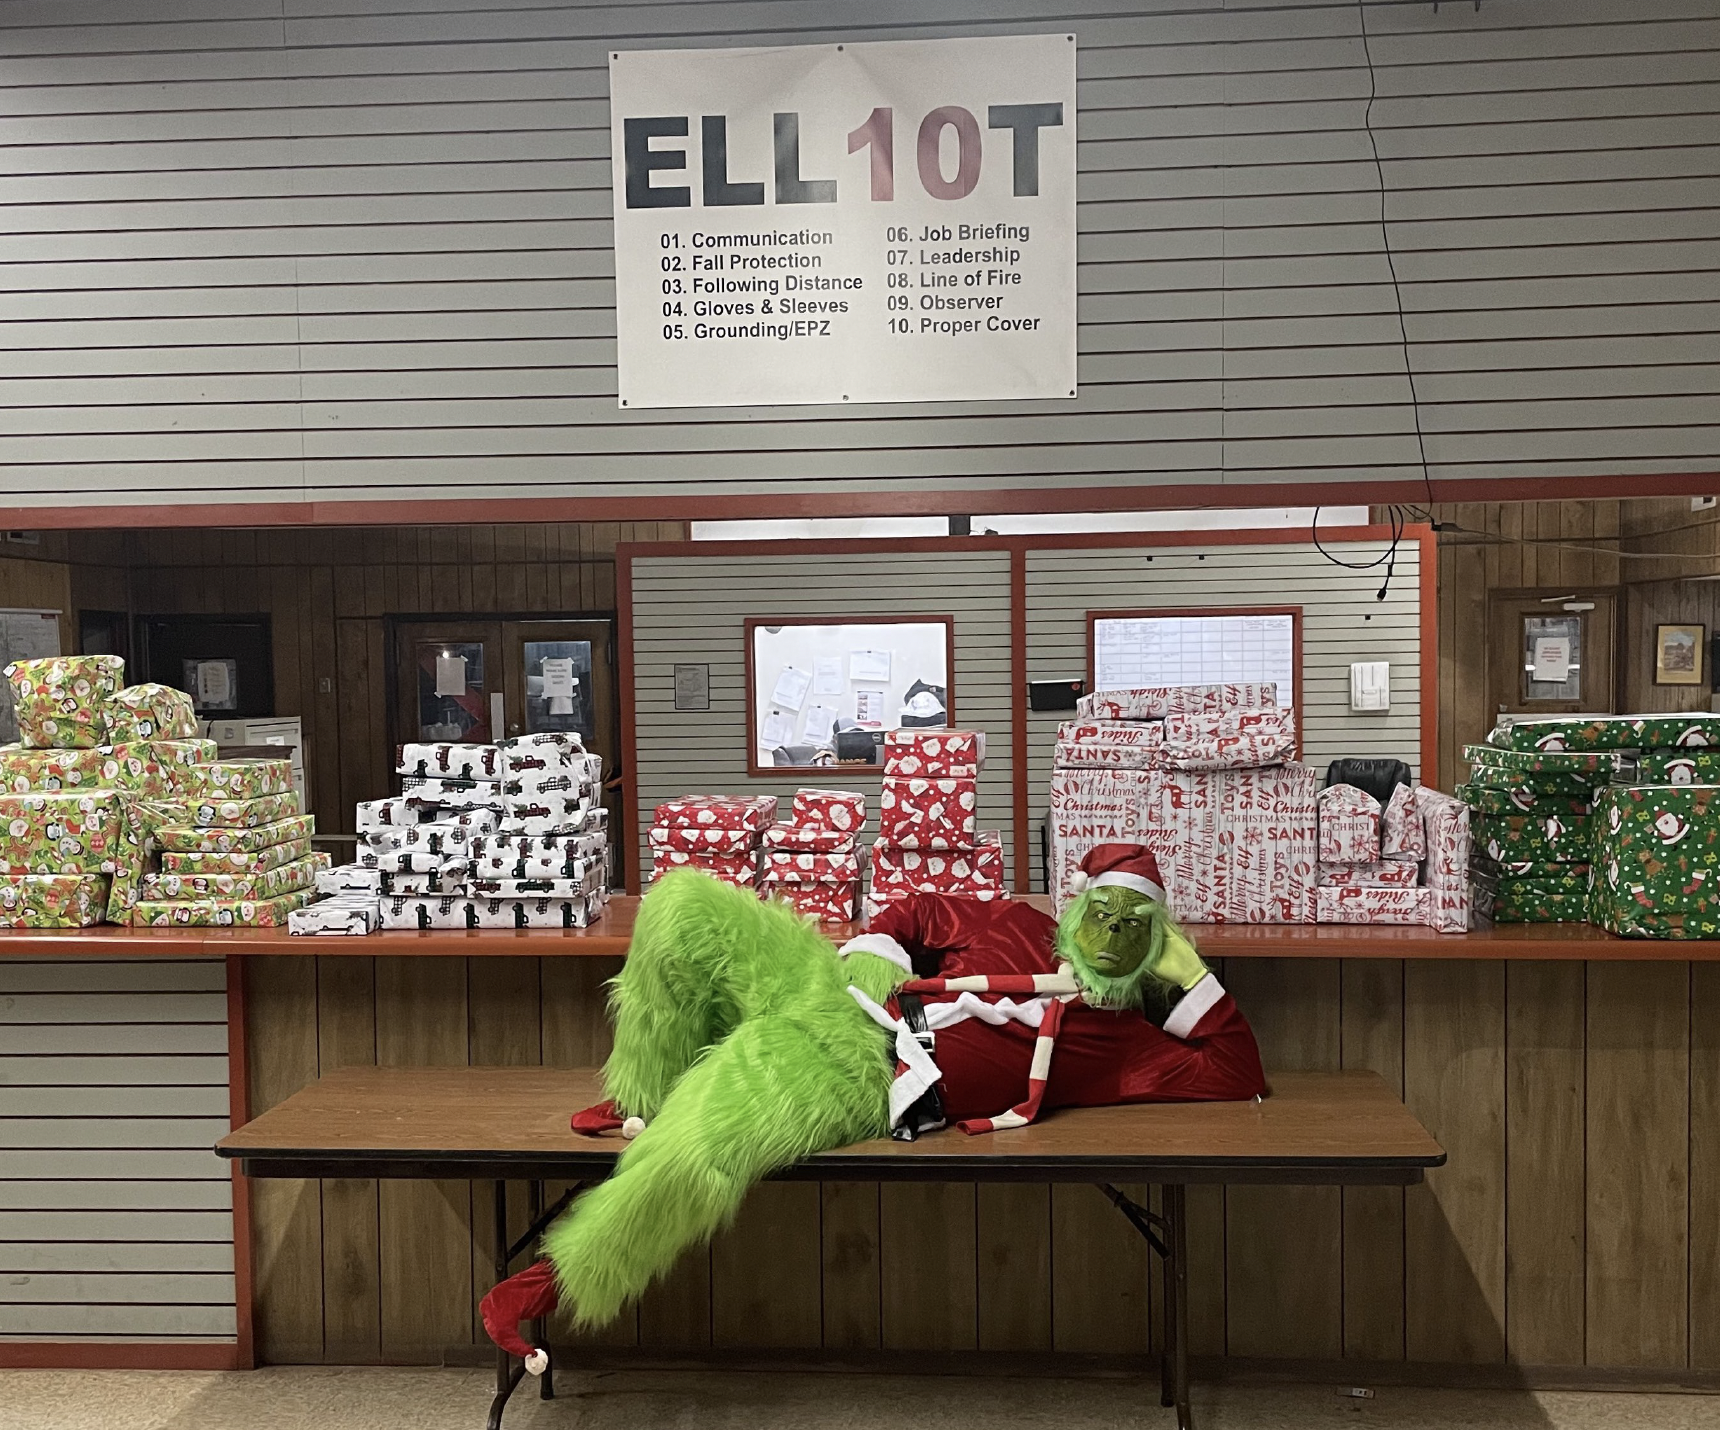 Elliot’s Western Region Spreads Christmas Cheer